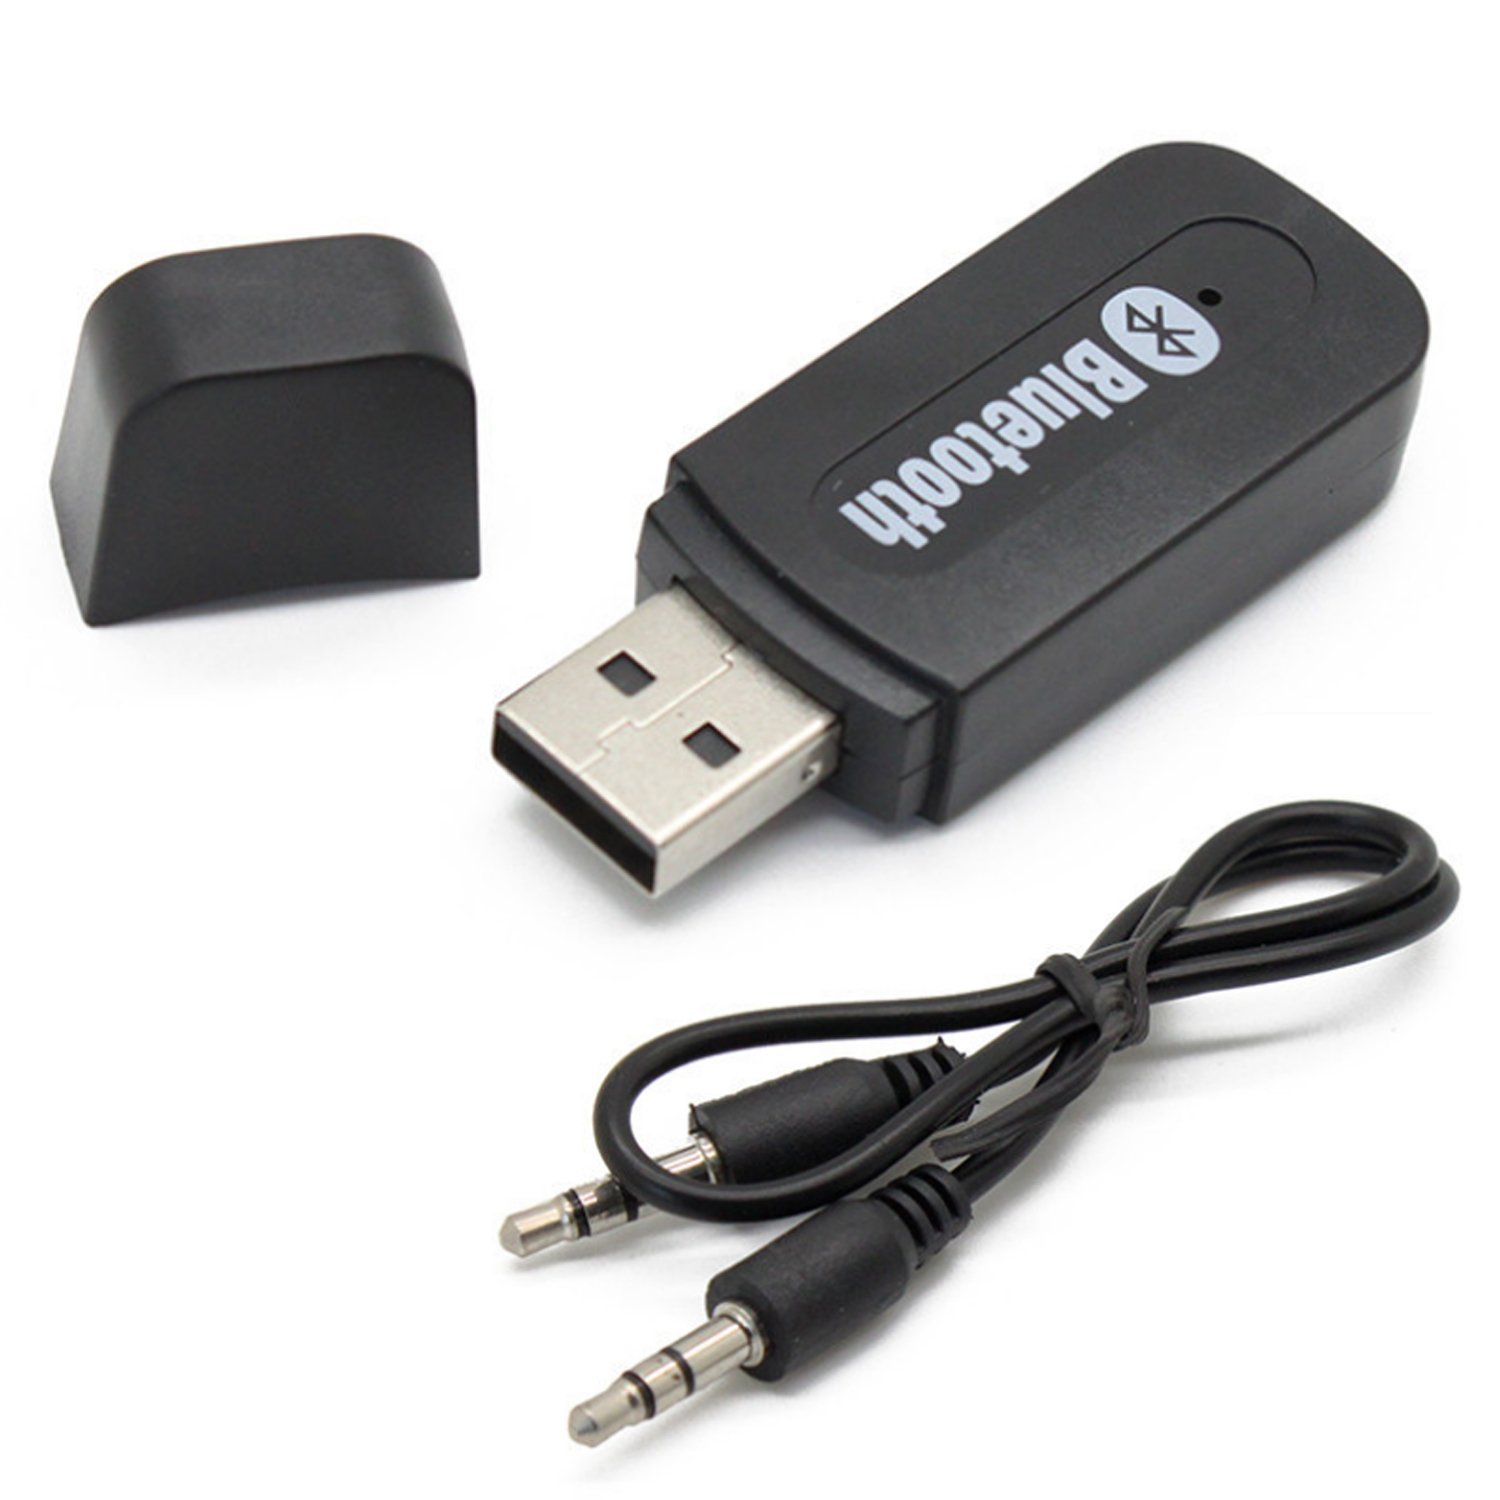 Порт bluetooth usb. Ресивер – адаптер Bluetooth Audio + Receiver aux. Bluetooth aux адаптер bt390 ot-pcb02. Адаптер для автомагнитолы USB Bluetooth aux. USB Bluetooth aux адаптер Hyundai.